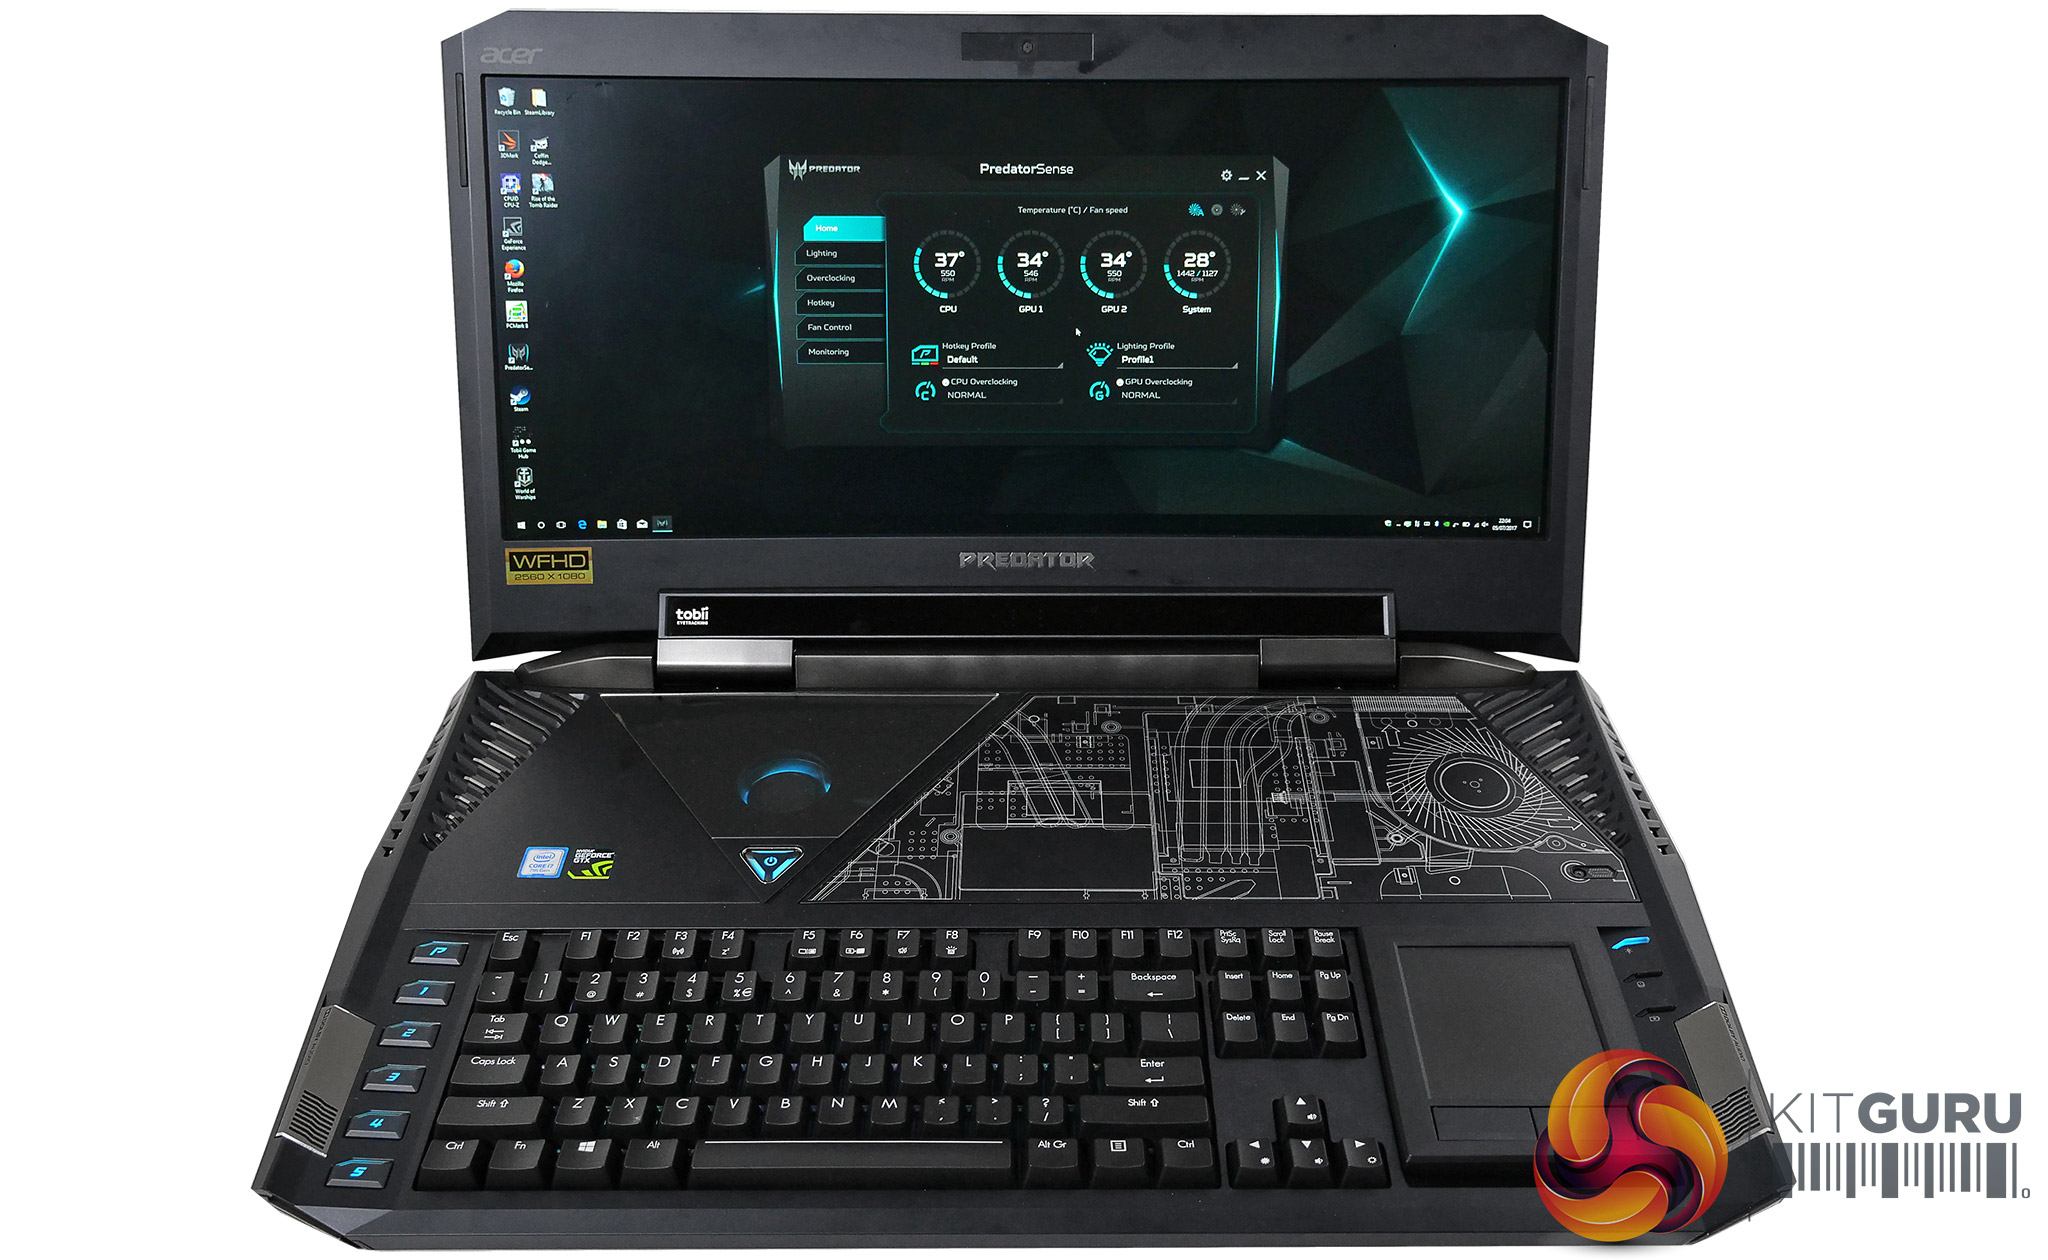 Acer Predator 21 X Laptop (21-inch GTX 1080 SLI) | KitGuru